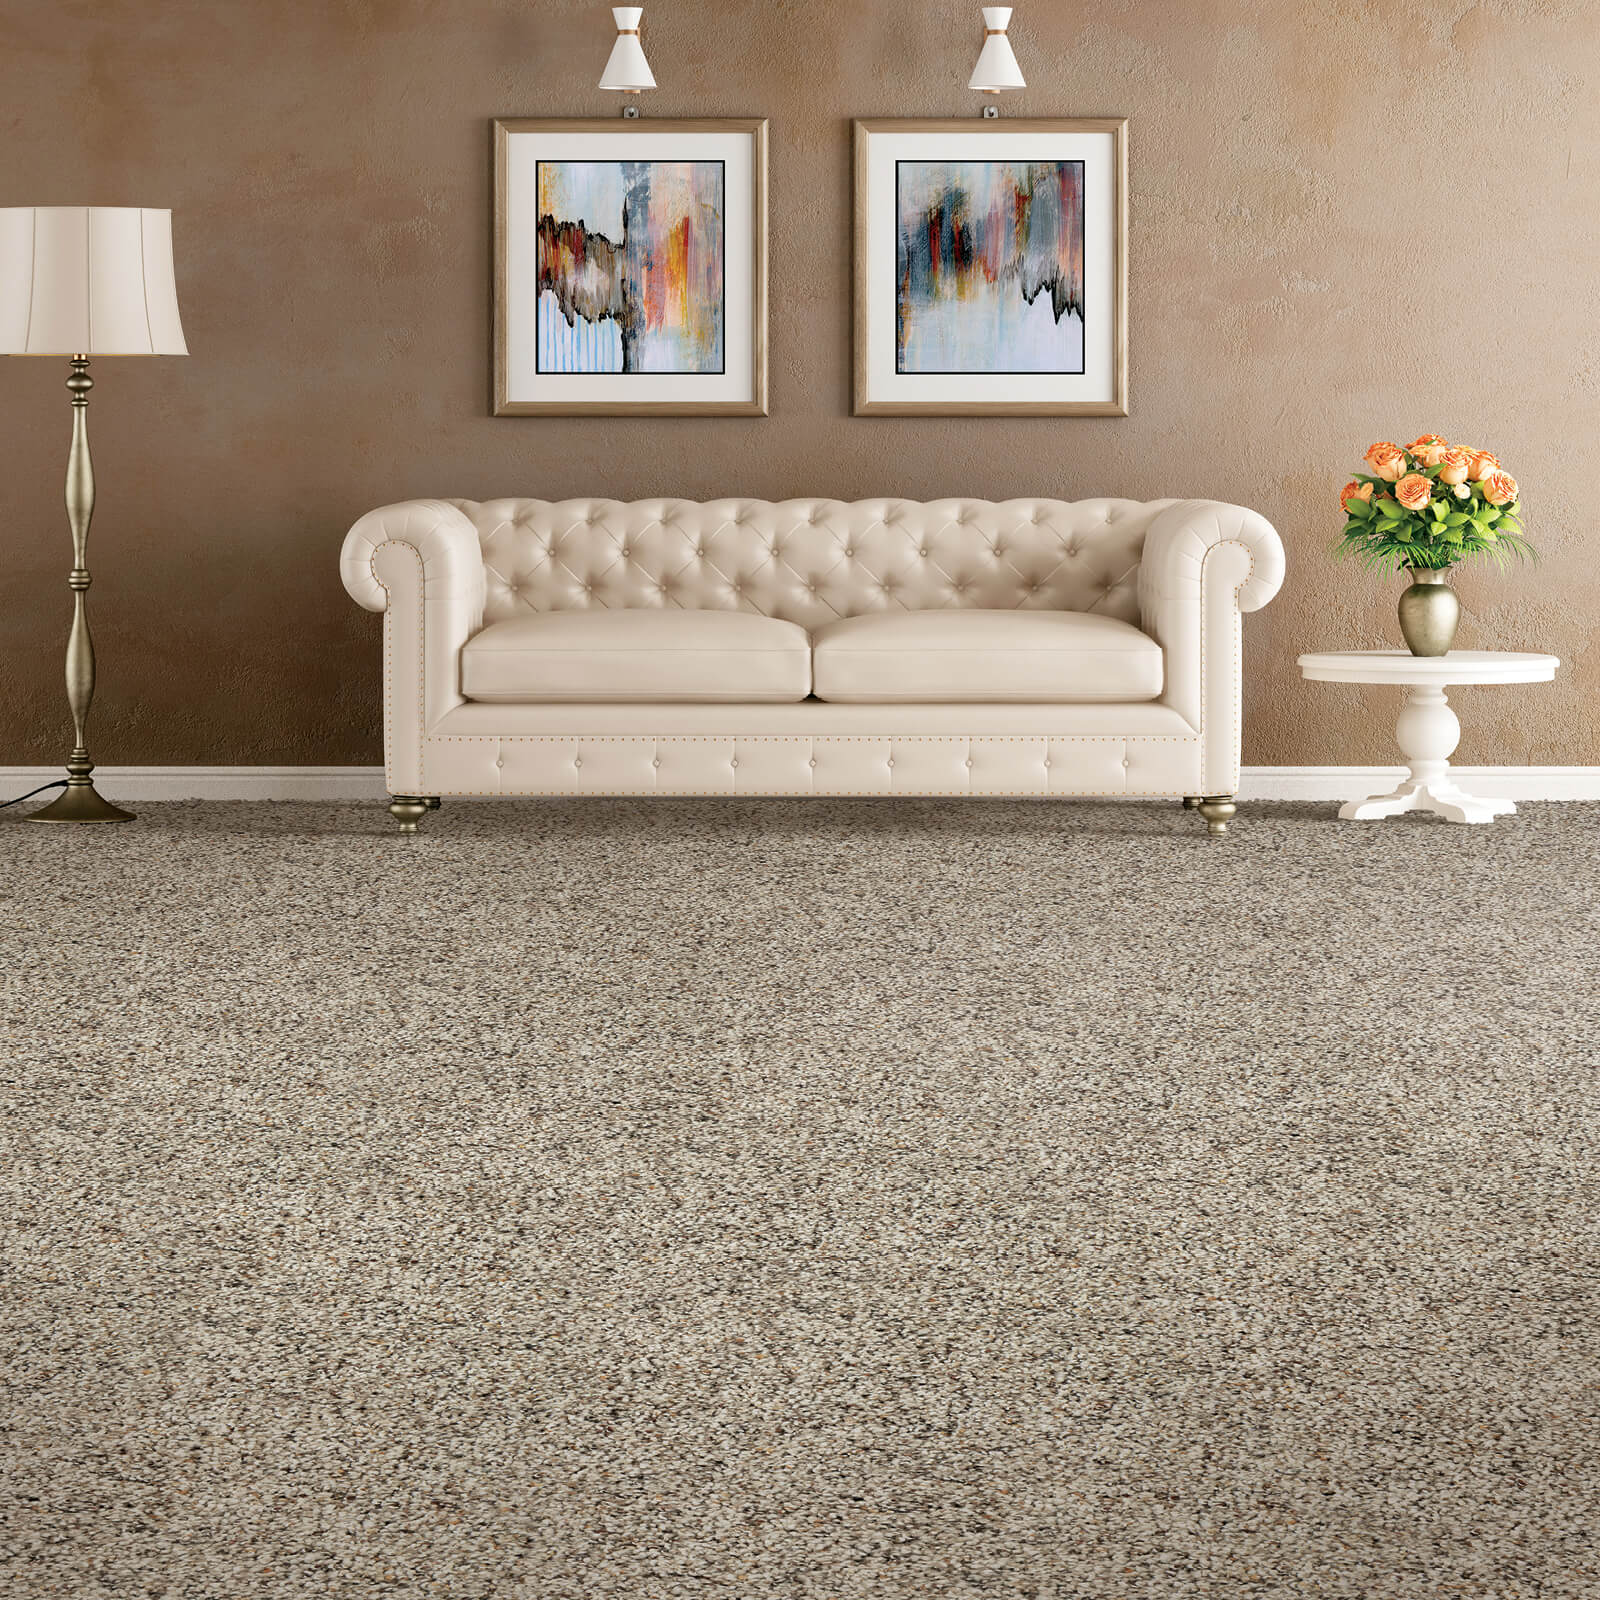 Soft comfortable carpet | Jabara's